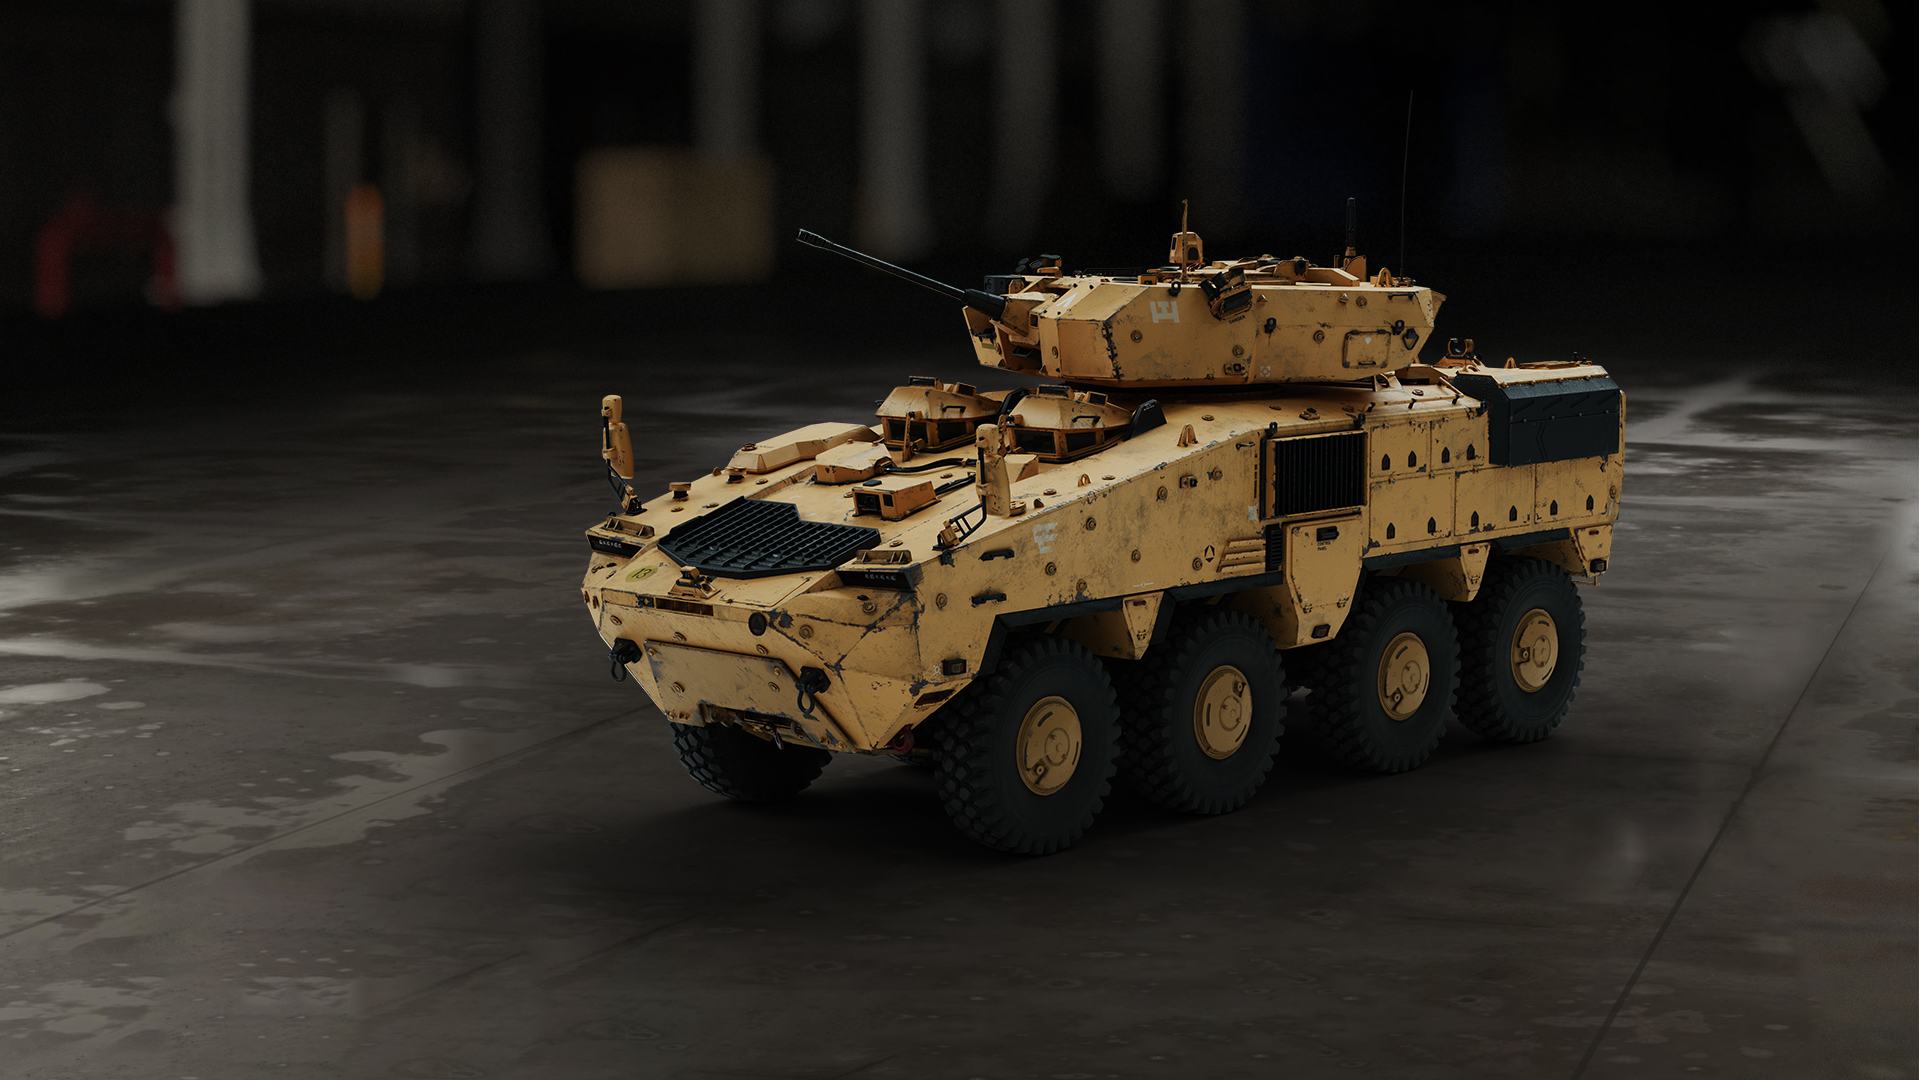 Modern Warfare 2 Vehicles: The APC can be seen